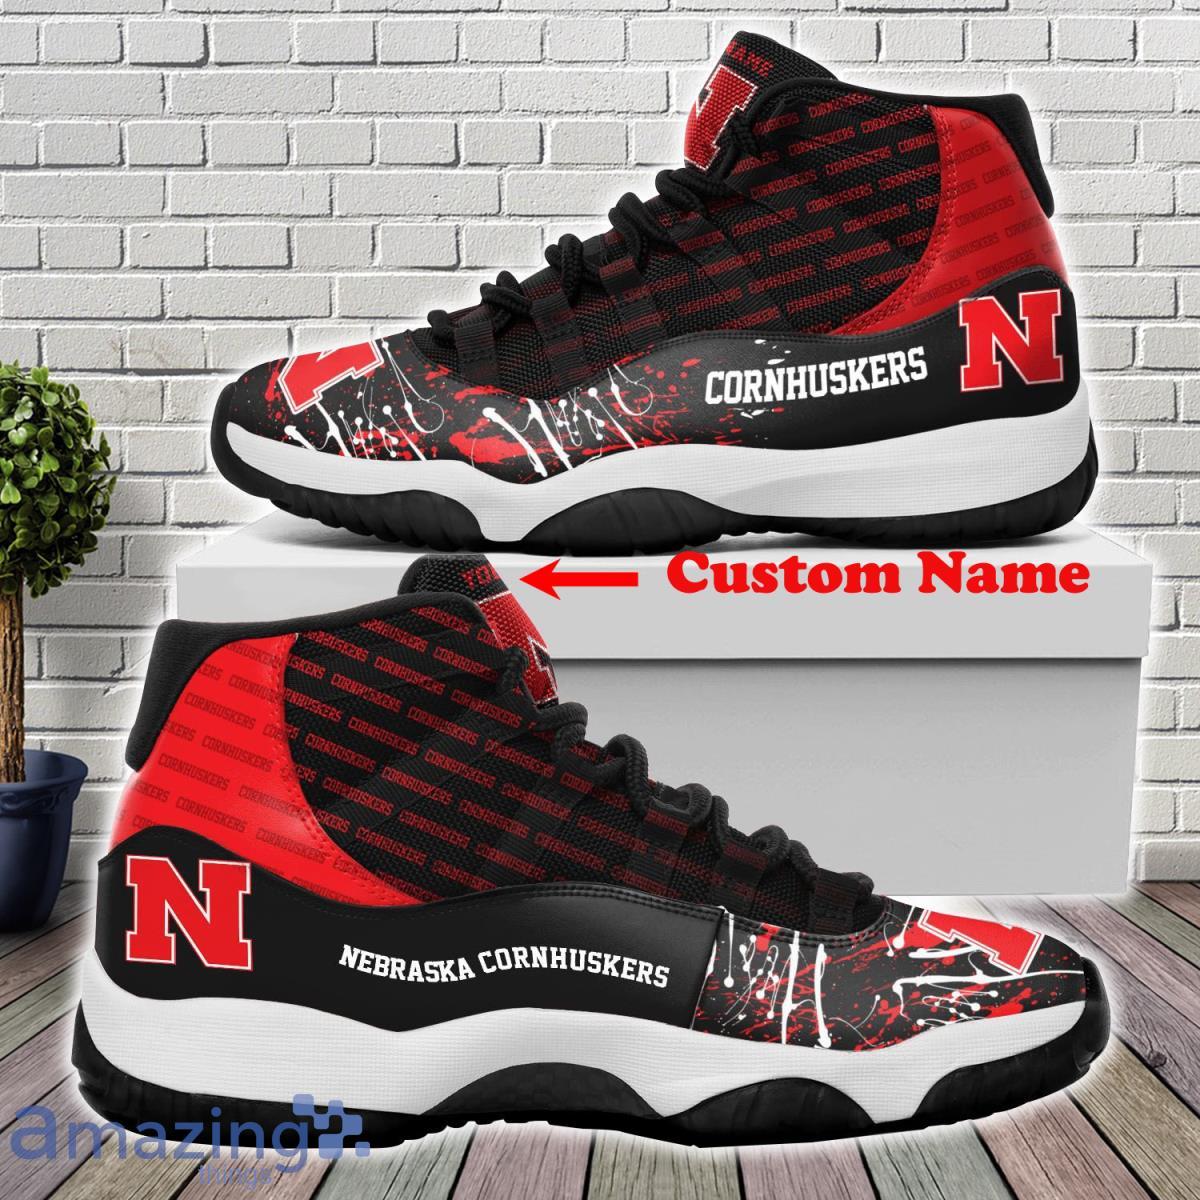 Nebraska Cornhuskers Football Team Air Jordan 11 Custom Name Sneakers For Fans Product Photo 1